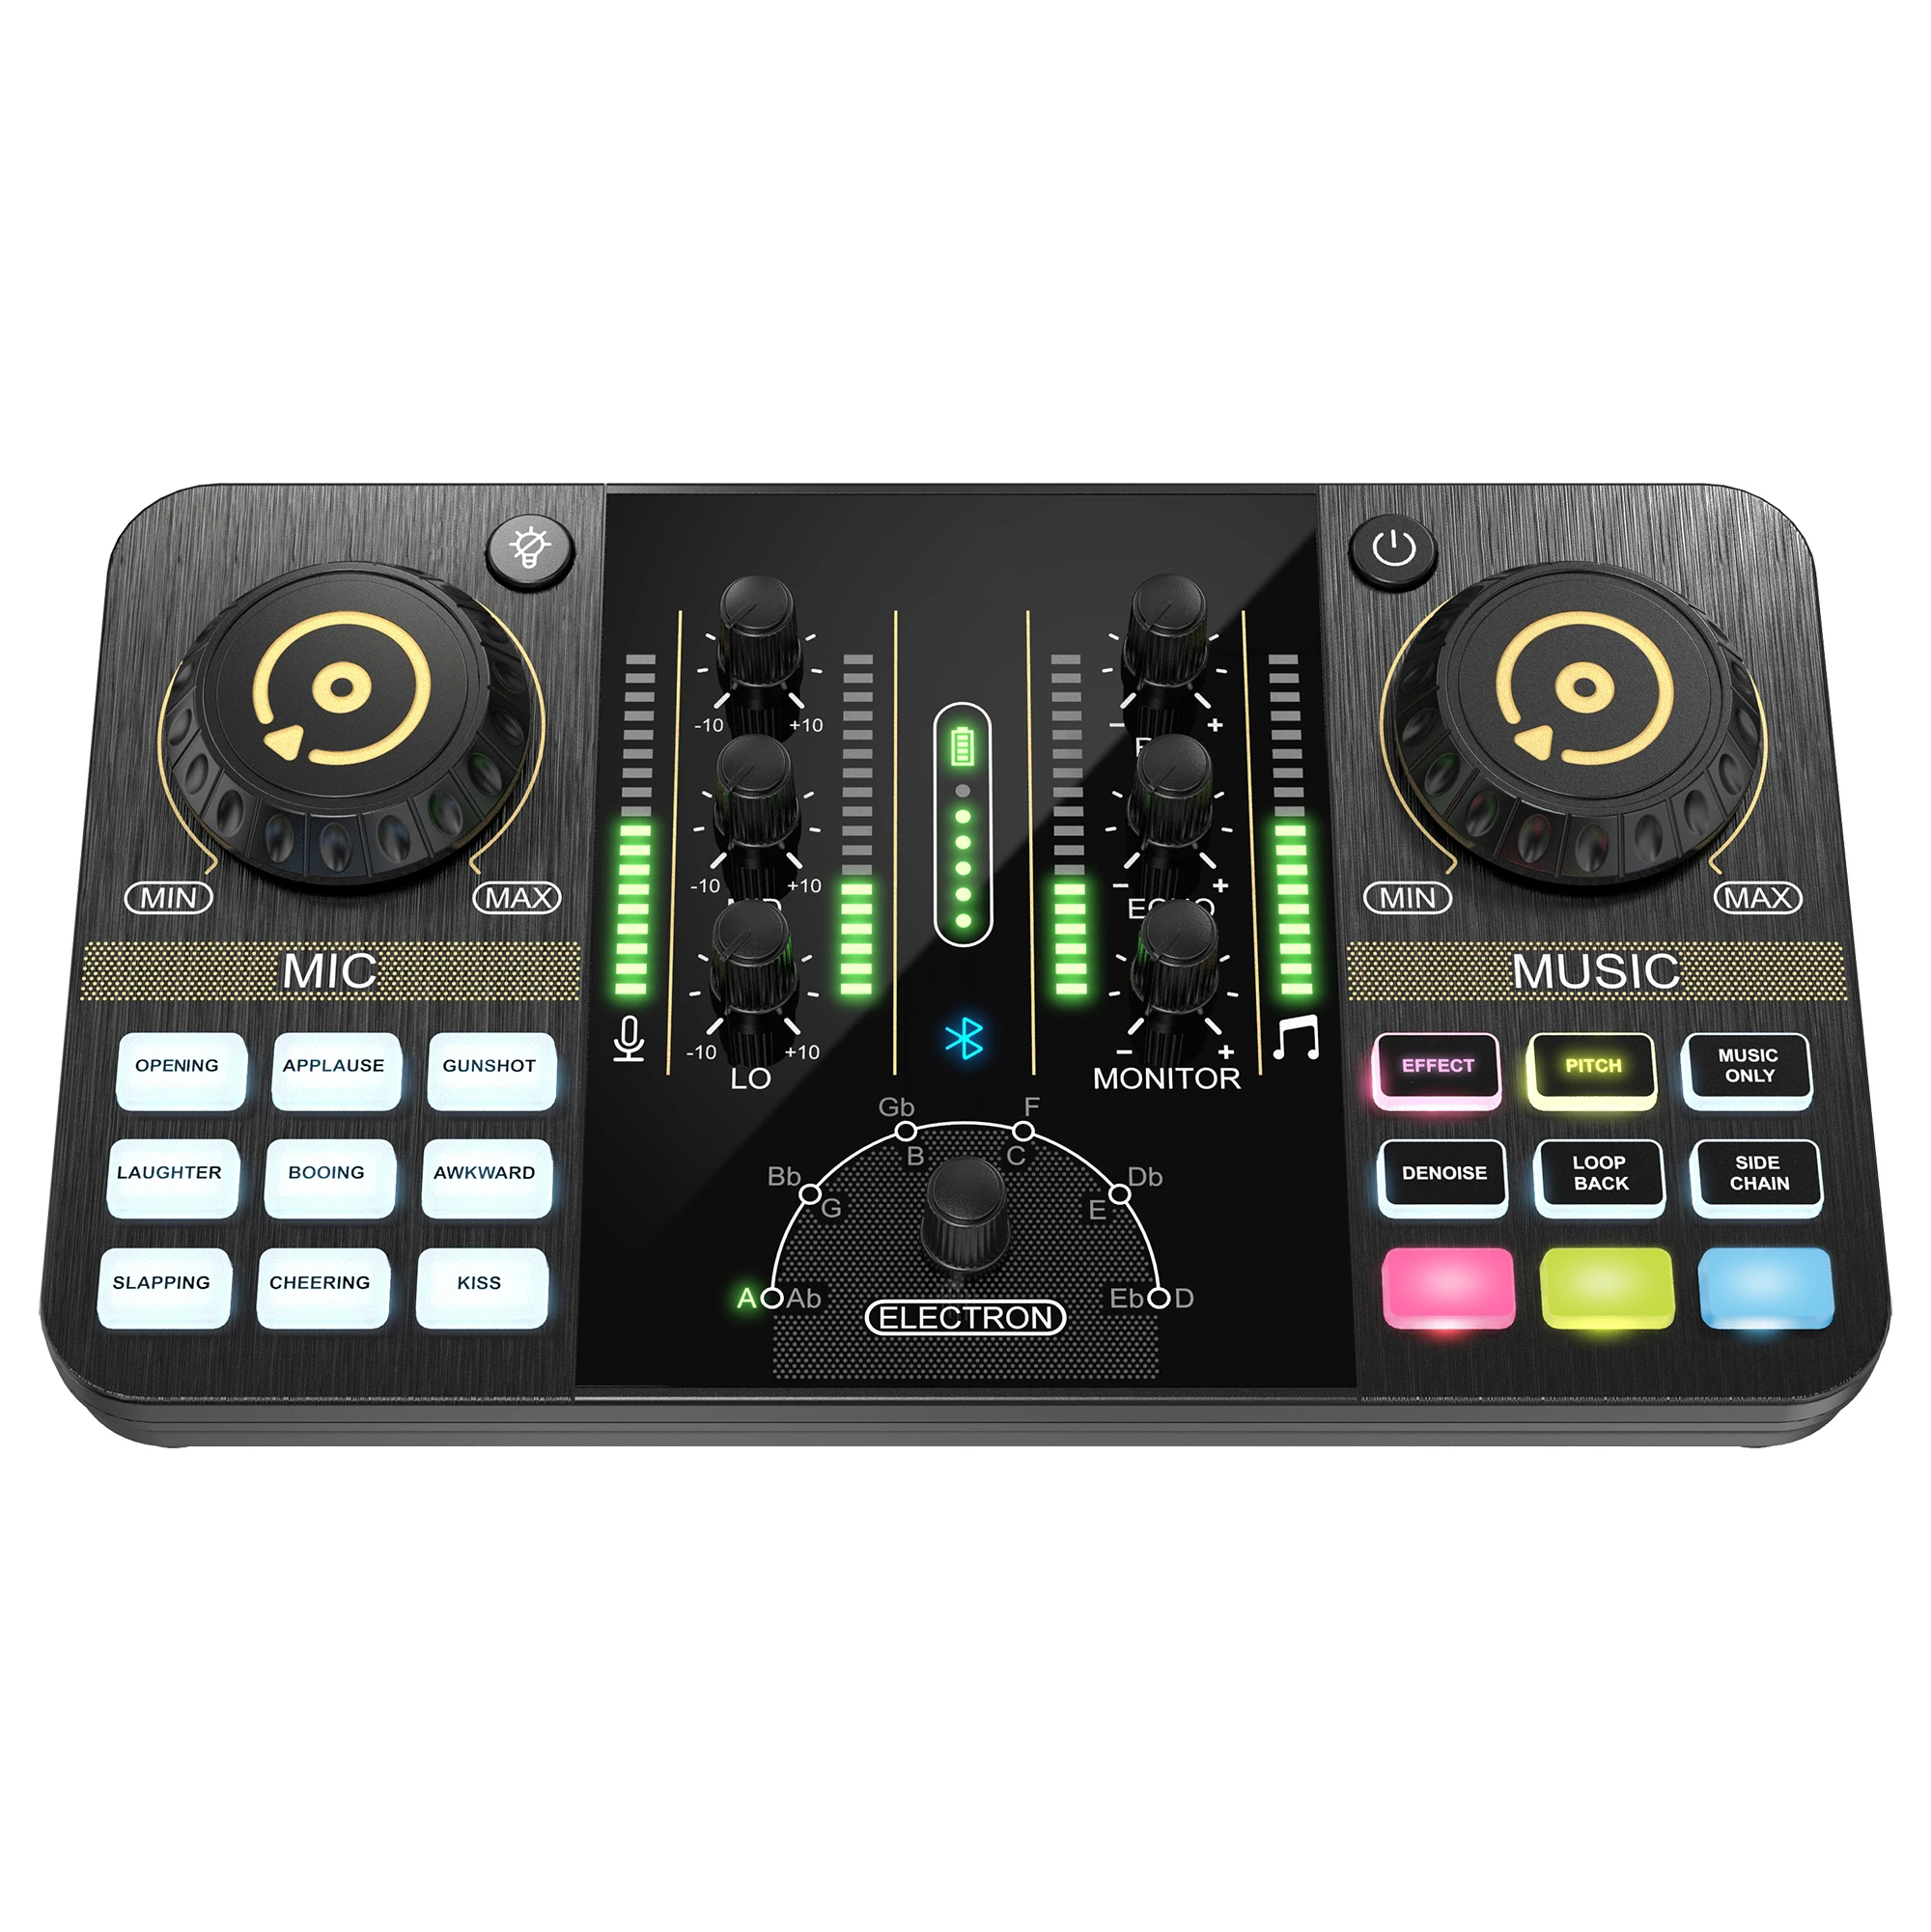 OEM Price Podcast Studio Equipment Kit Recording Professional USB Live Stream Audio Interface Voice Changer Soundcard Sound Card